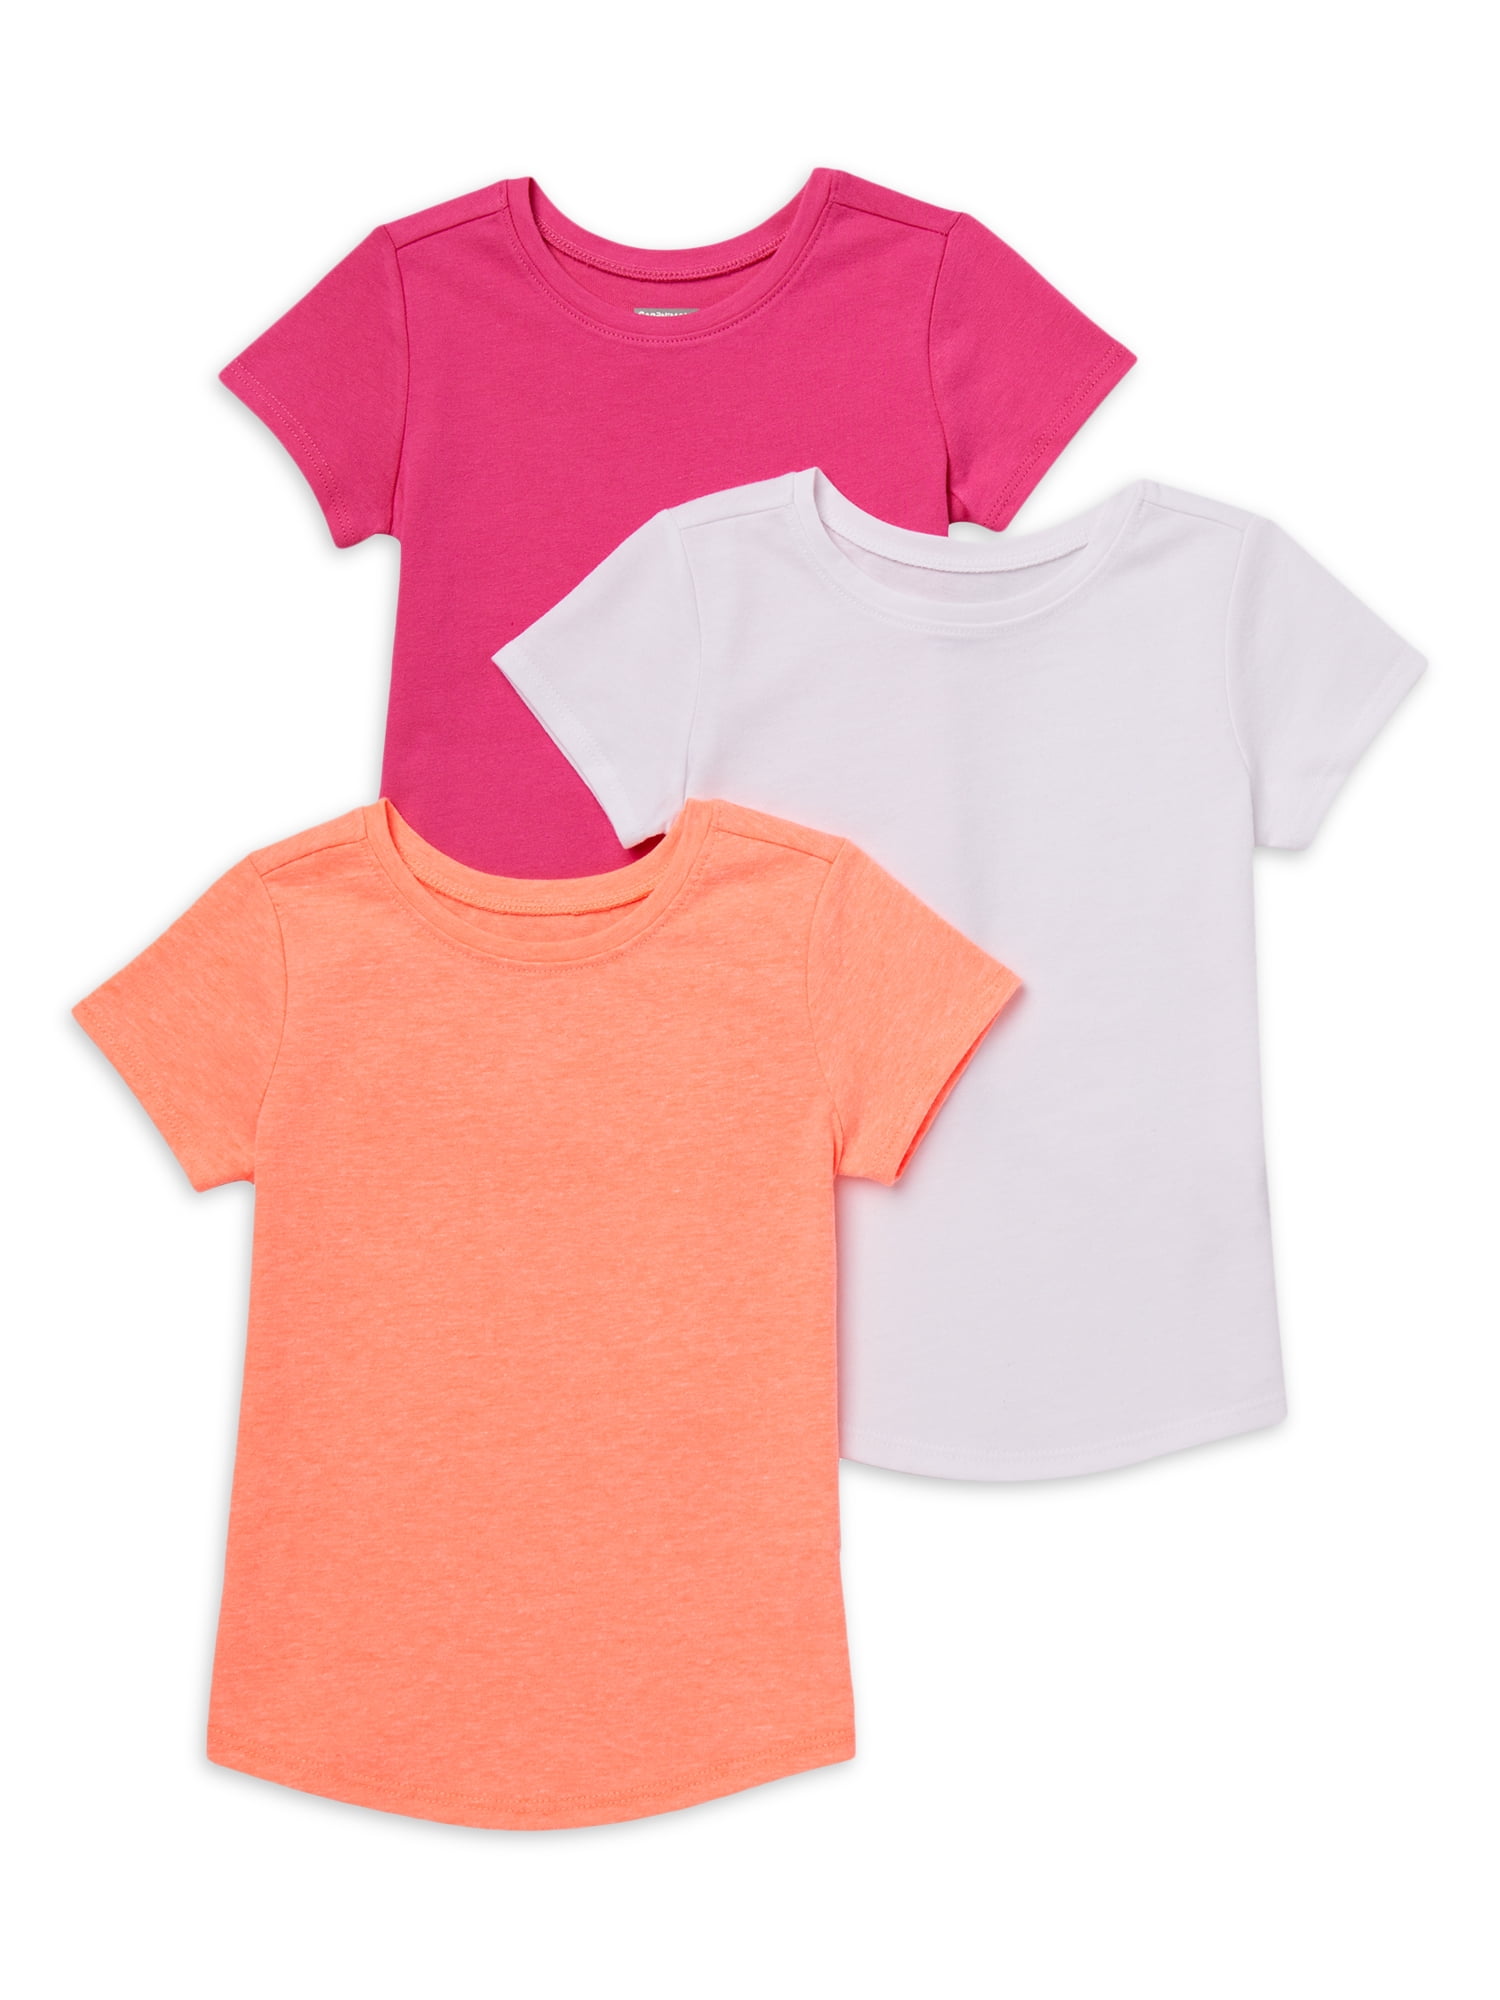 Garanimals Baby Toddler Girls Tiered Ruffle Shirt Short Sleeve 18 24 Months 3T 